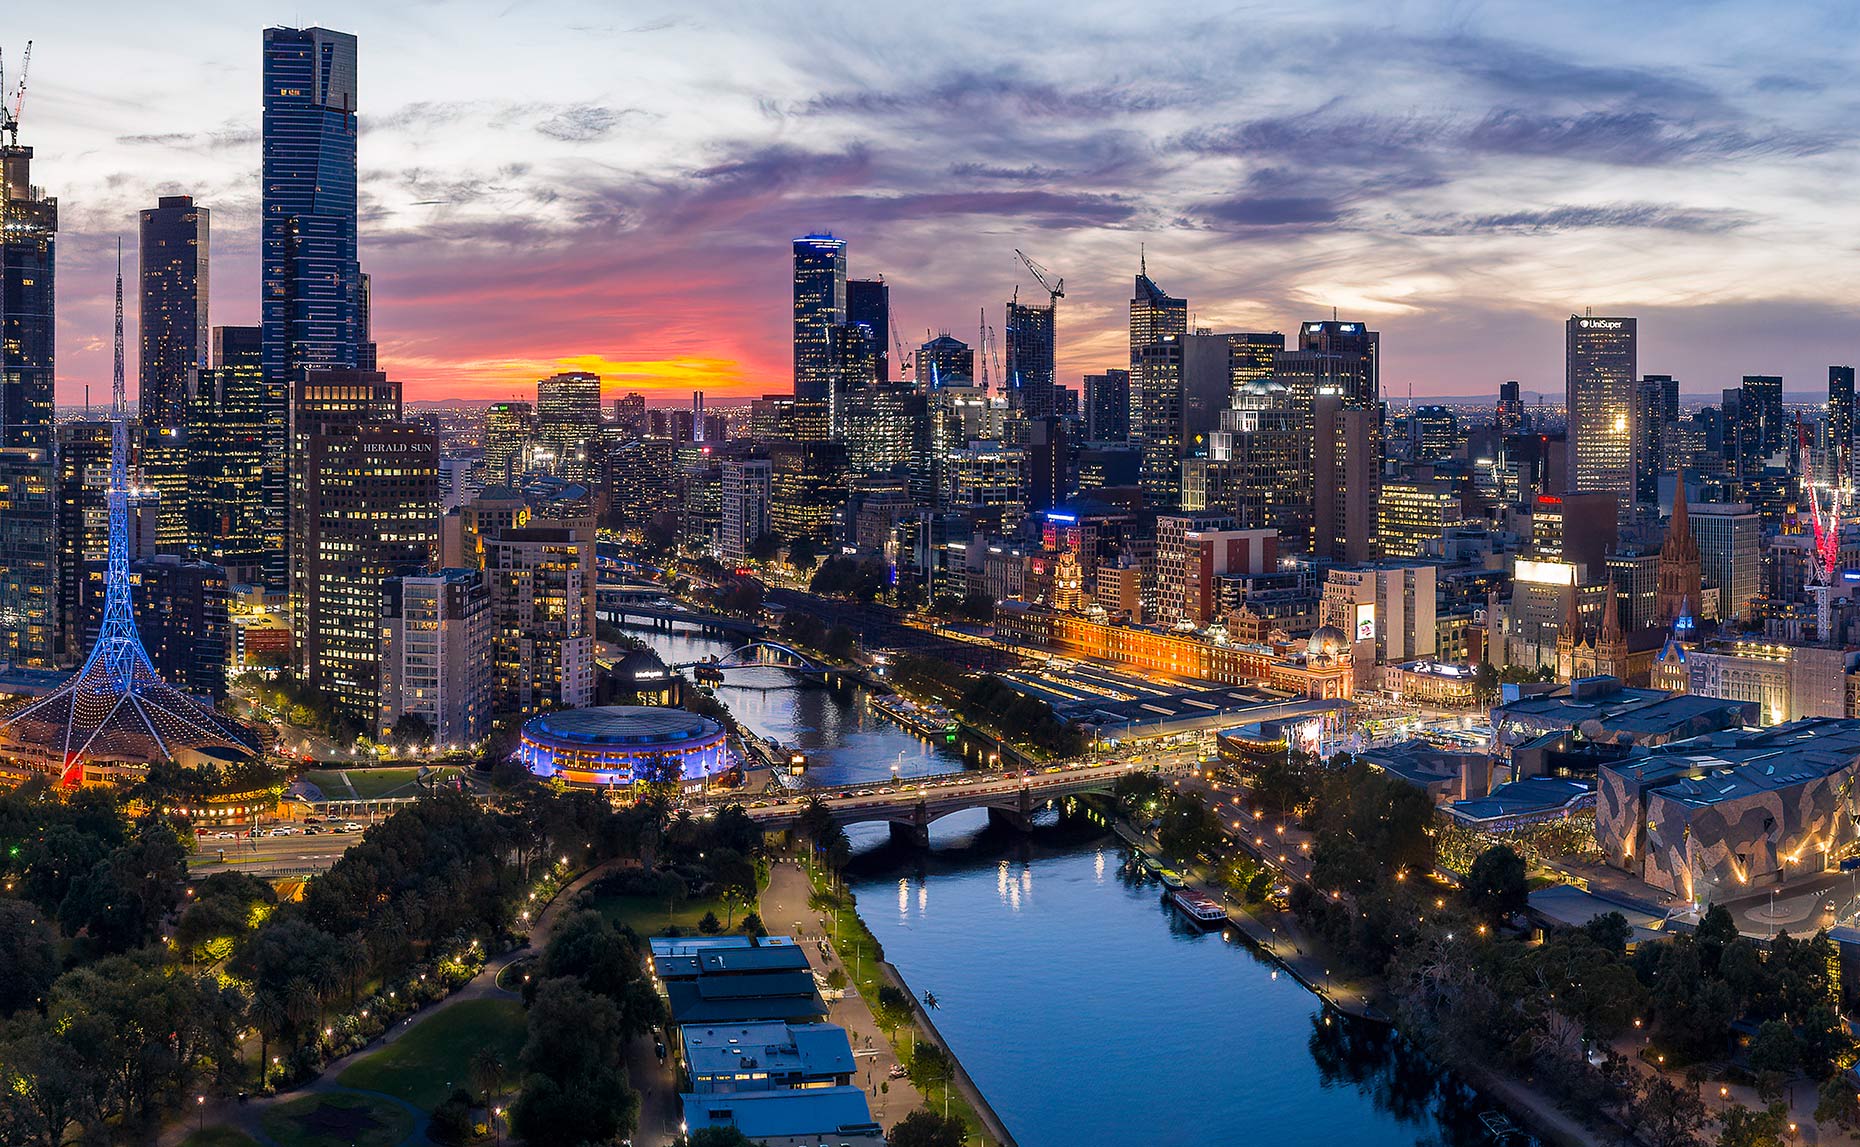 Melbourne Australia aerial view © Michael Evans Photographer 2019